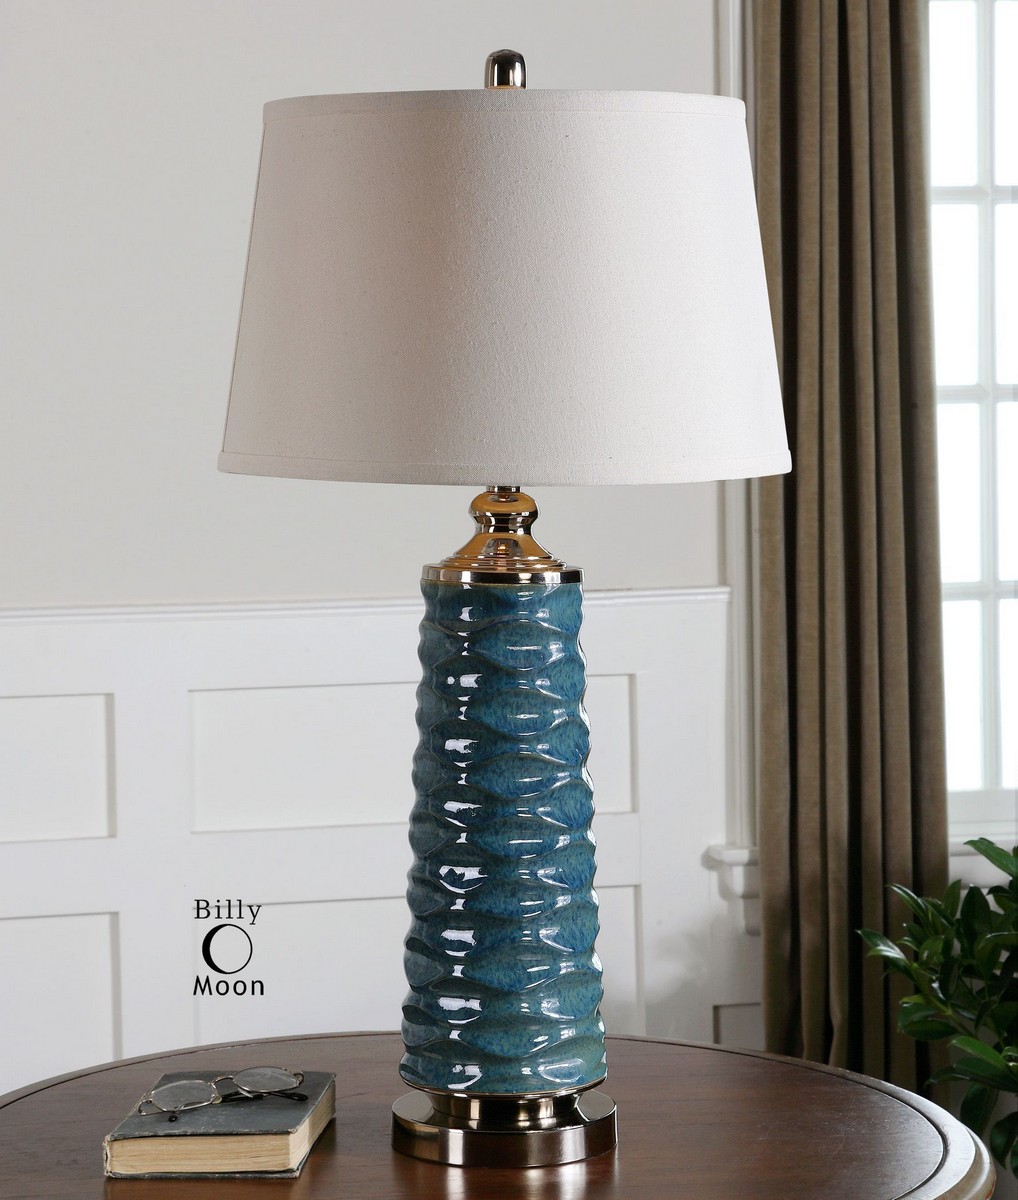 Uttermost Delavan Rust Blue Table Lamp